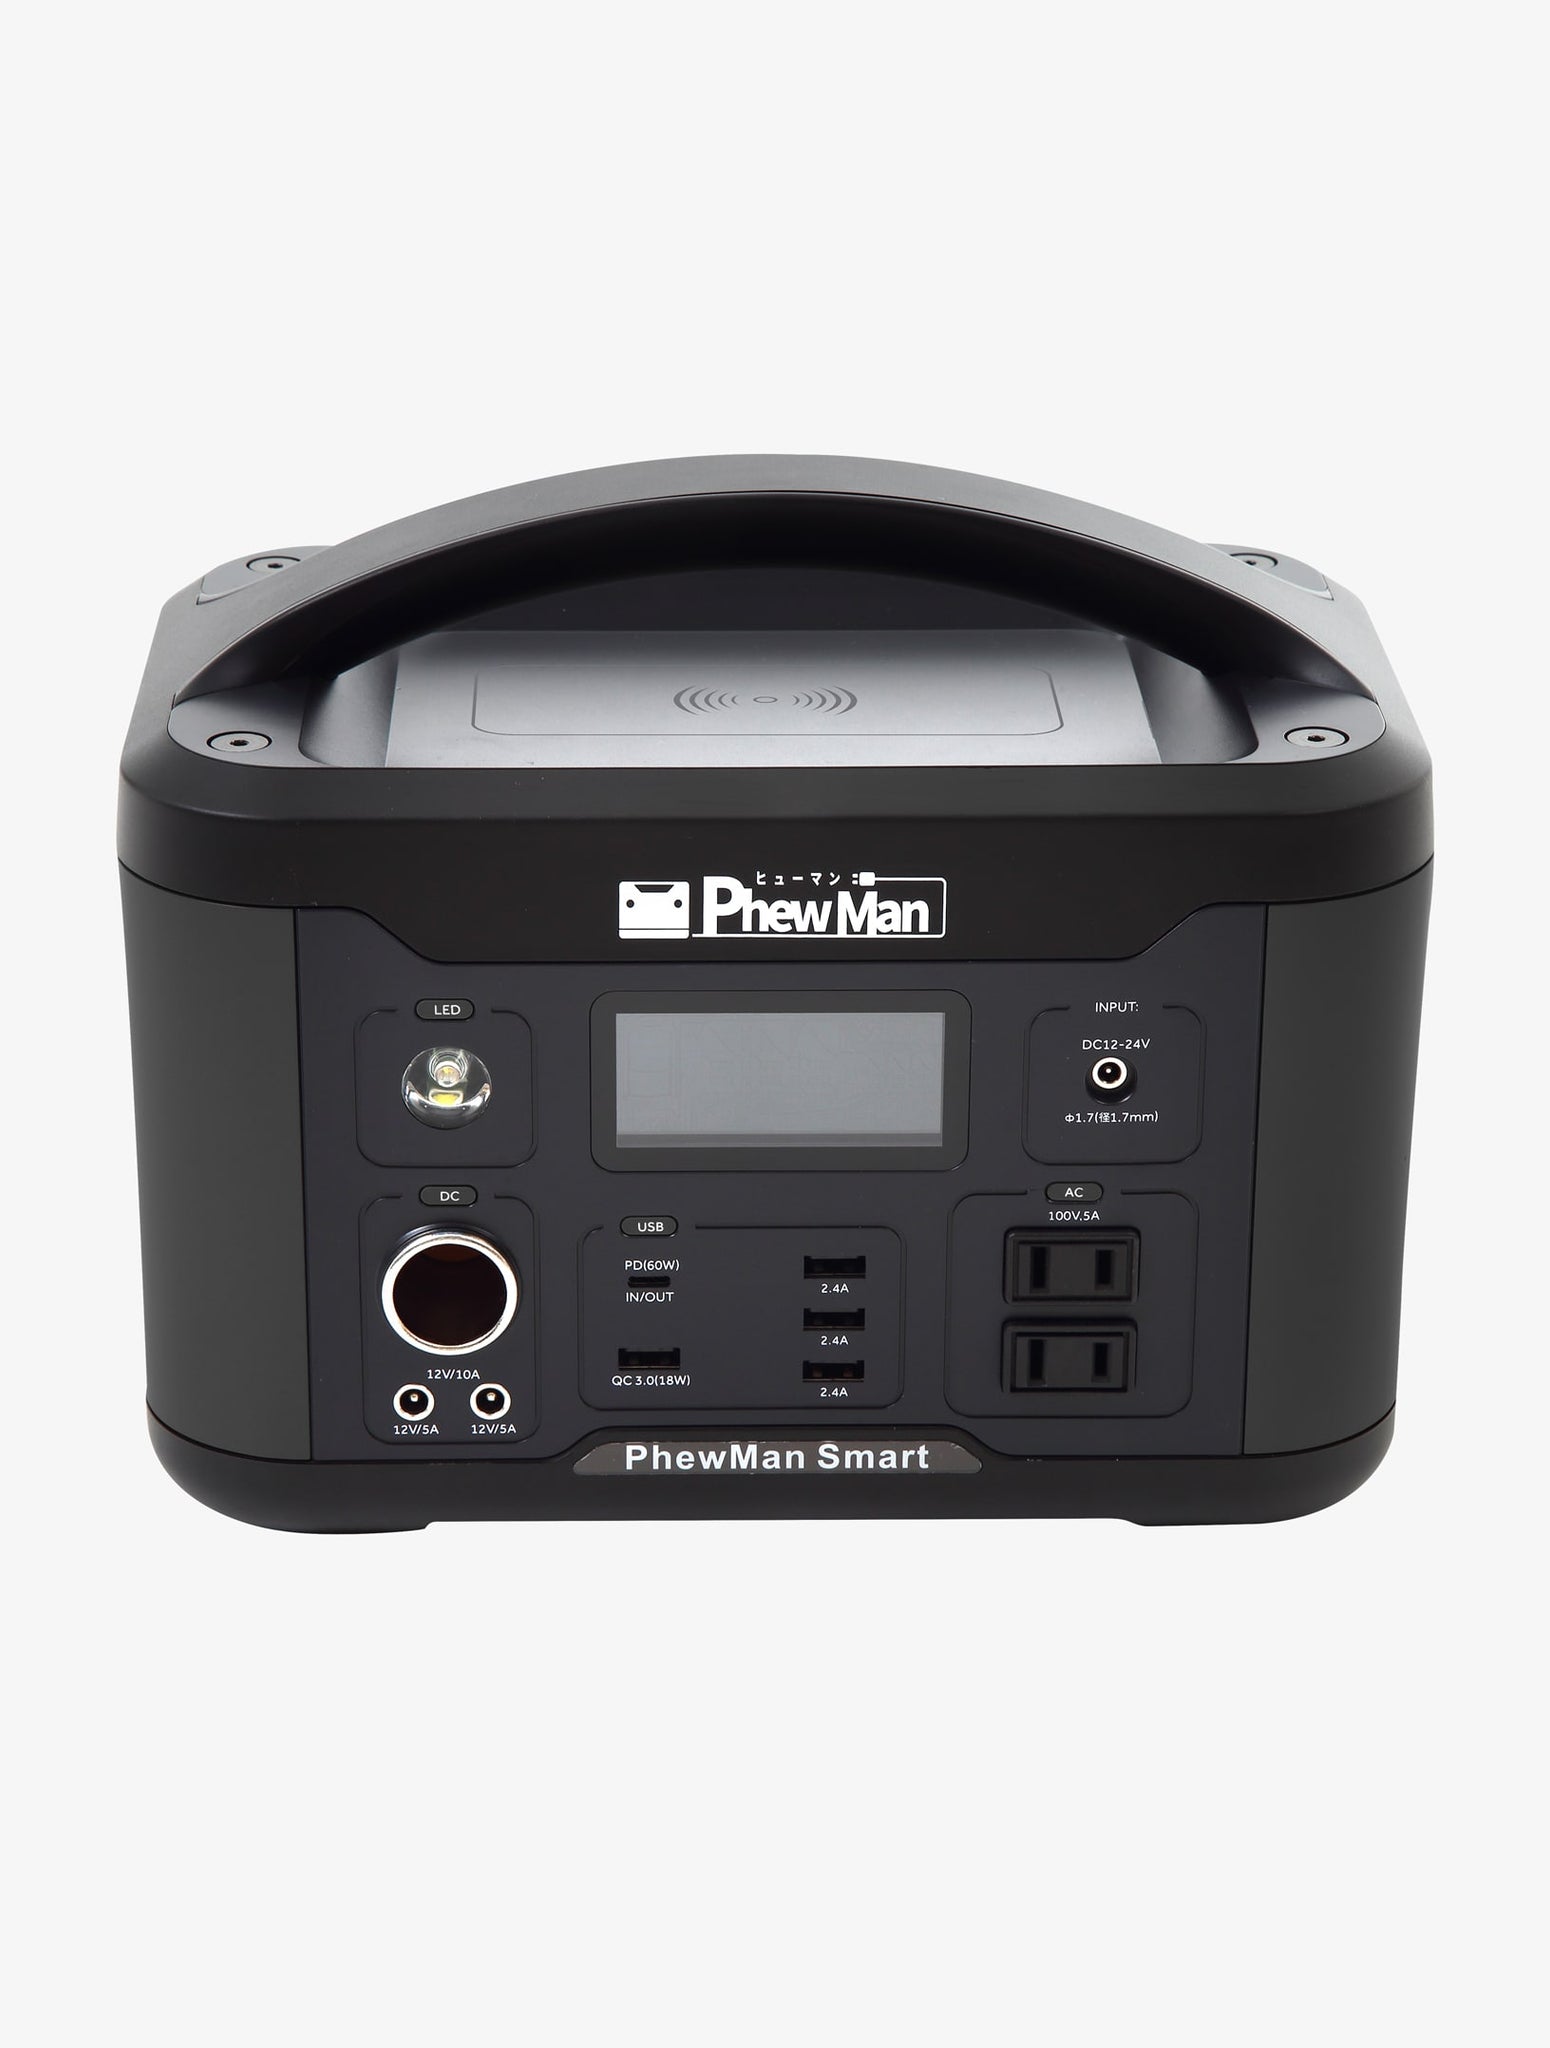 PhewMan smart500 ポータブル電源 防災グッズ 非常用電源装置